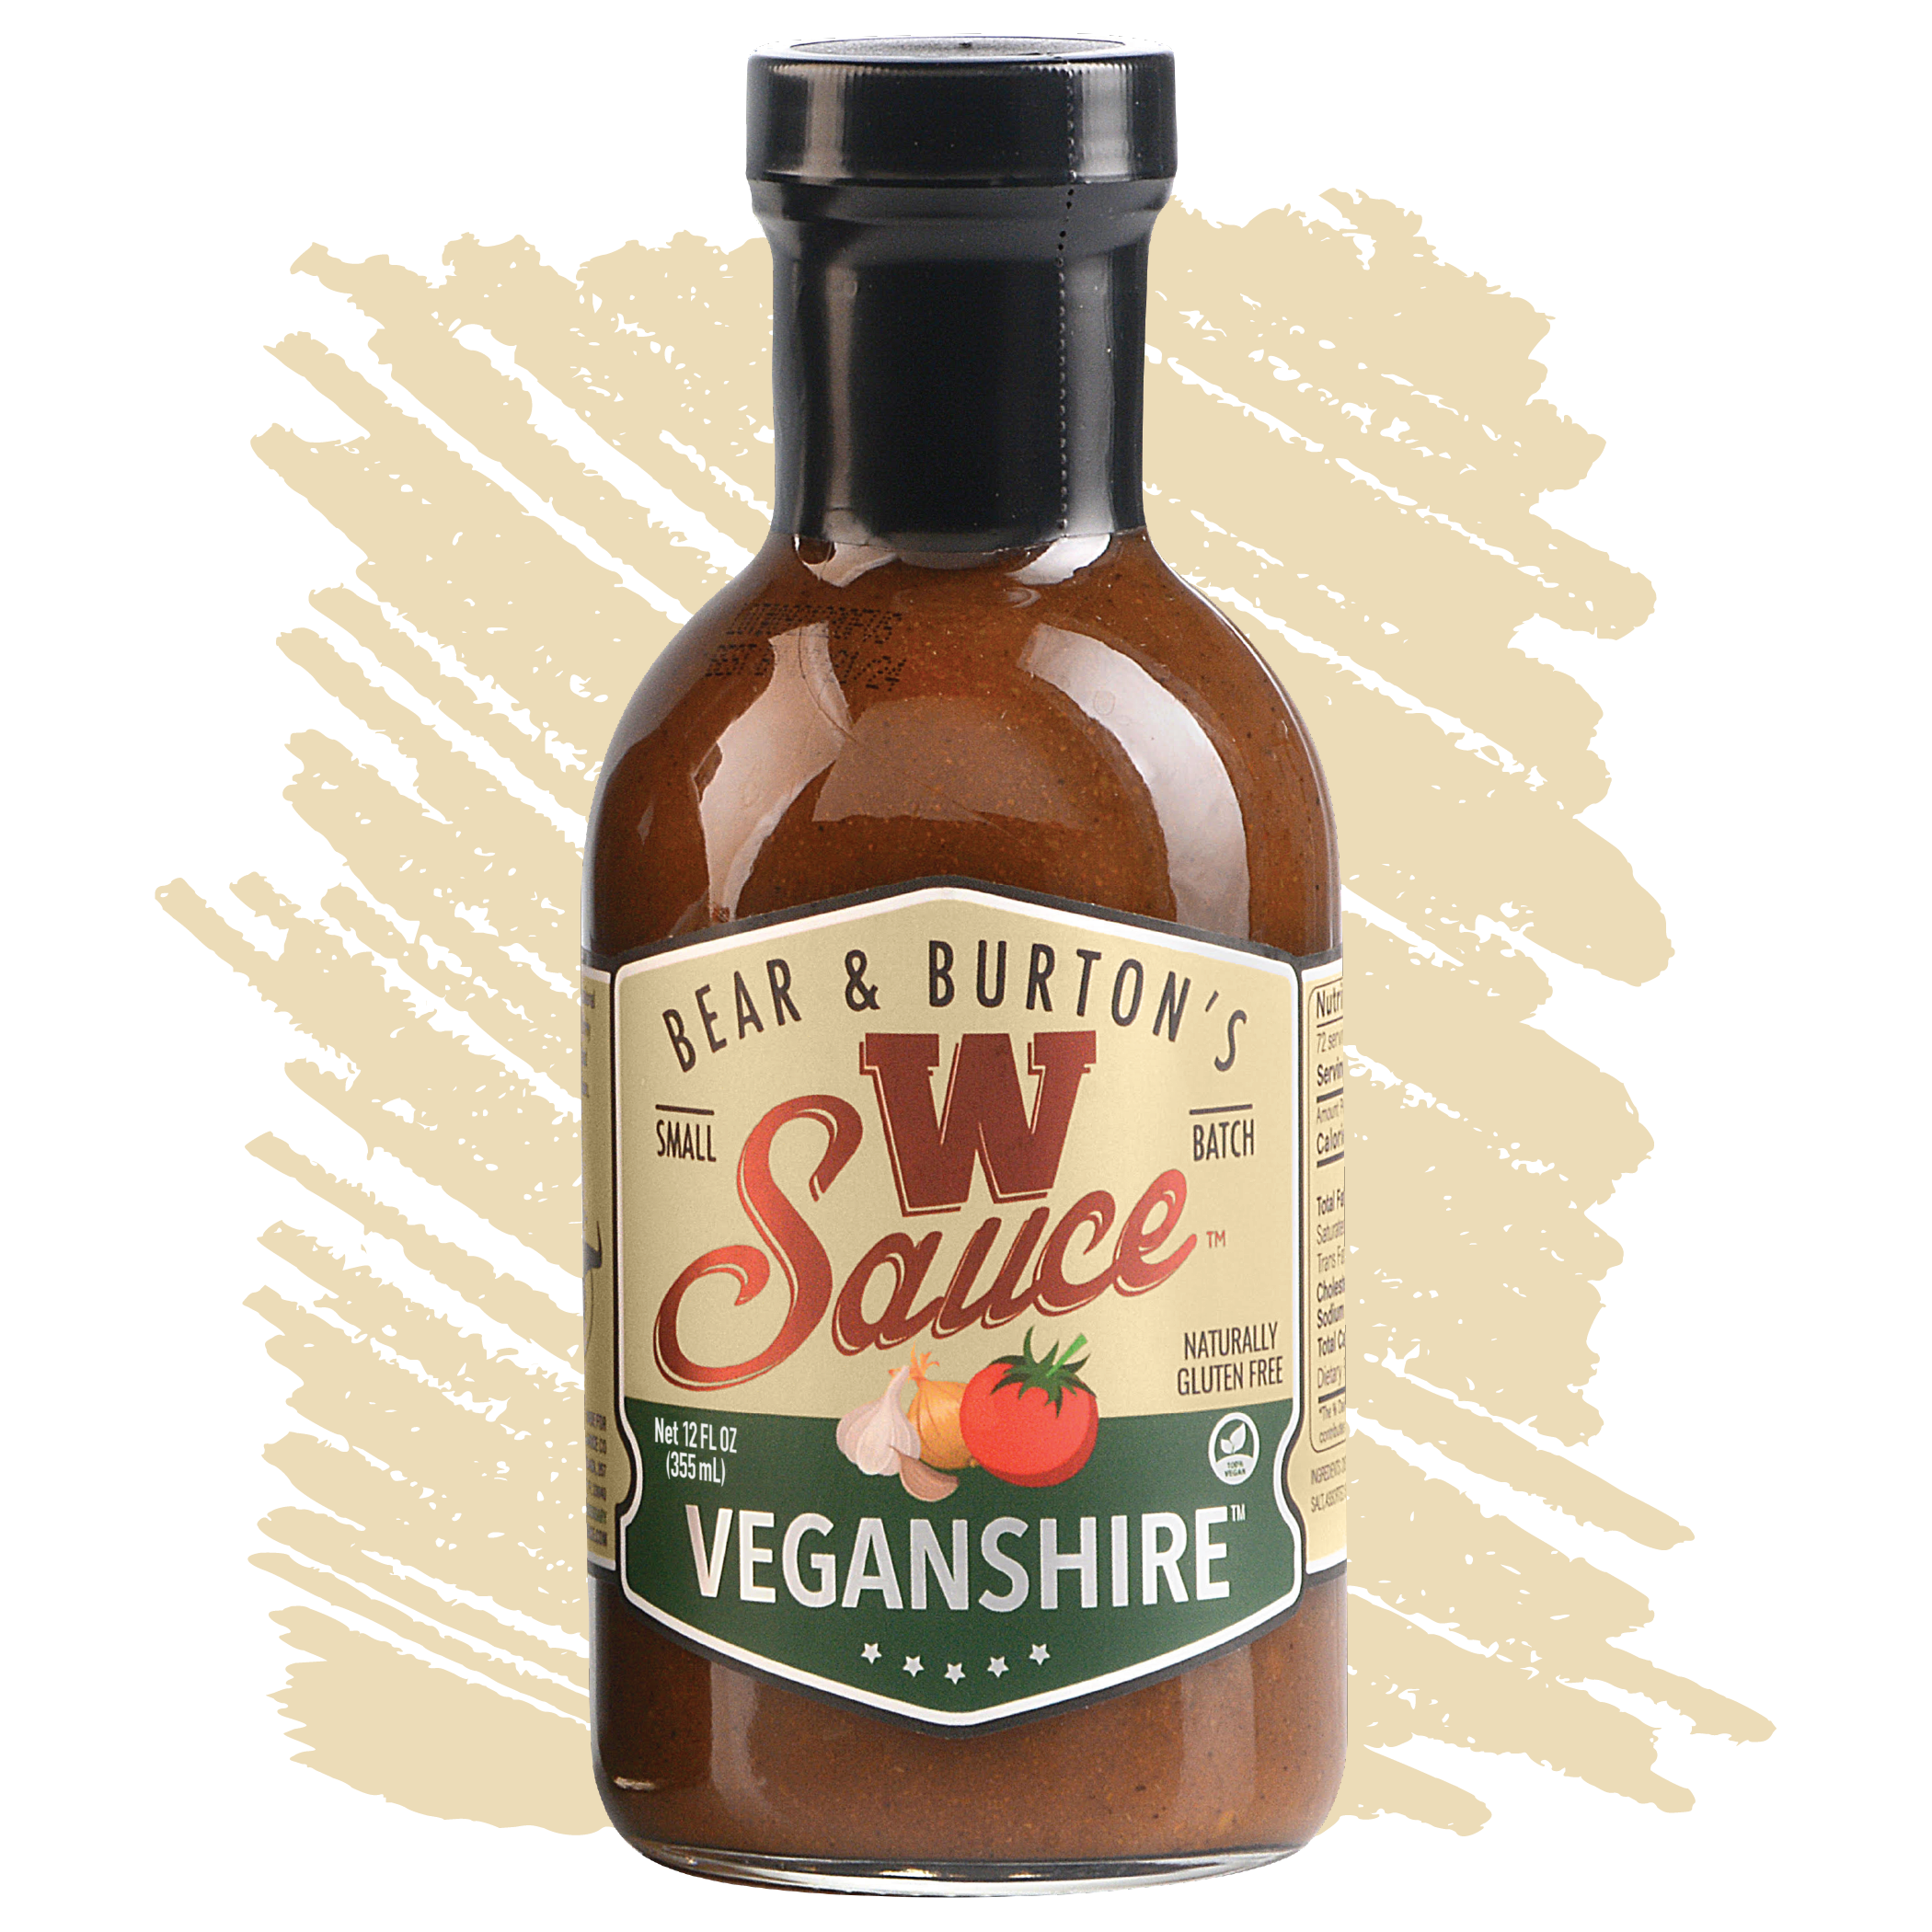 Worcestershire sauce